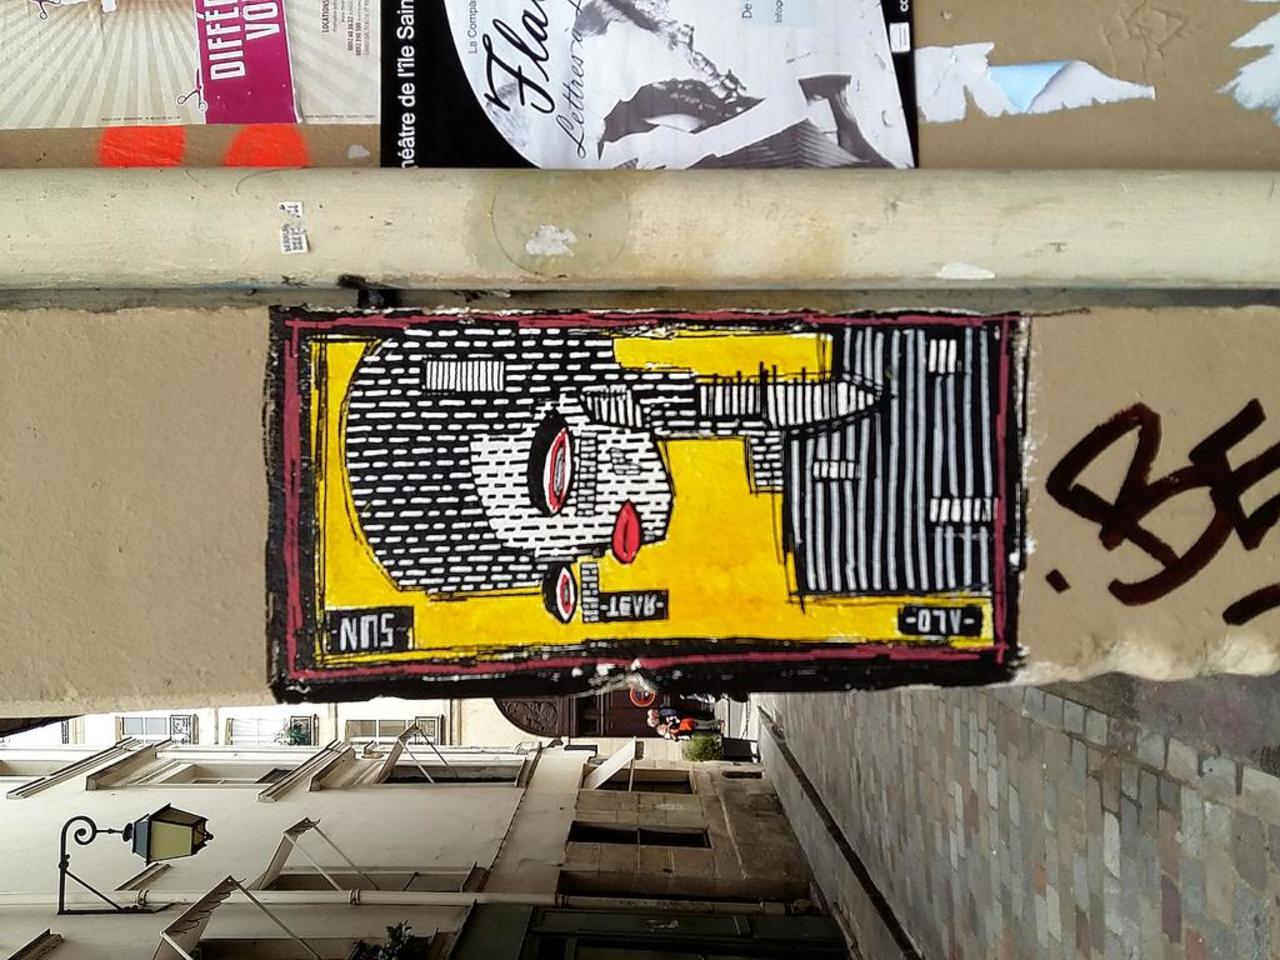 Street Art by alo_art in #Paris http://www.urbacolors.com #art #mural #graffiti #streetart http://t.co/wl34MwVasv